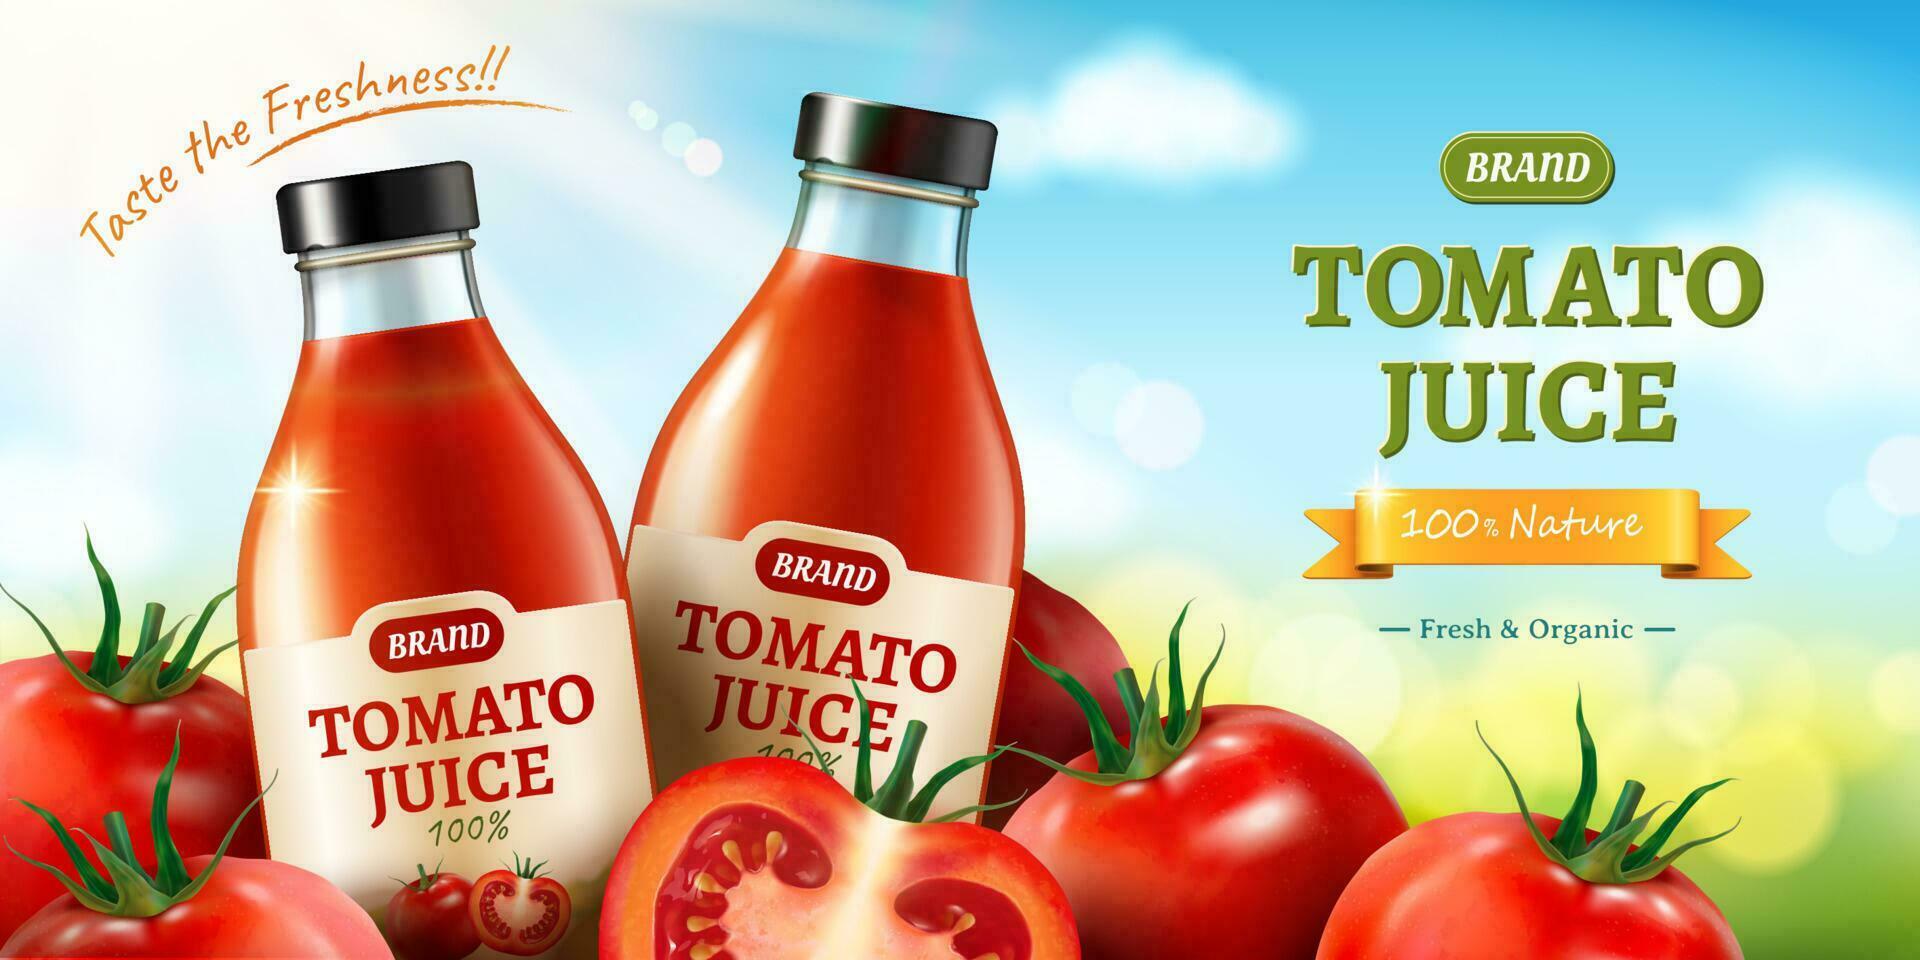 färsk tomat juice annonser med pålar av grönsaker på bokeh blå himmel bakgrund i 3d illustration vektor